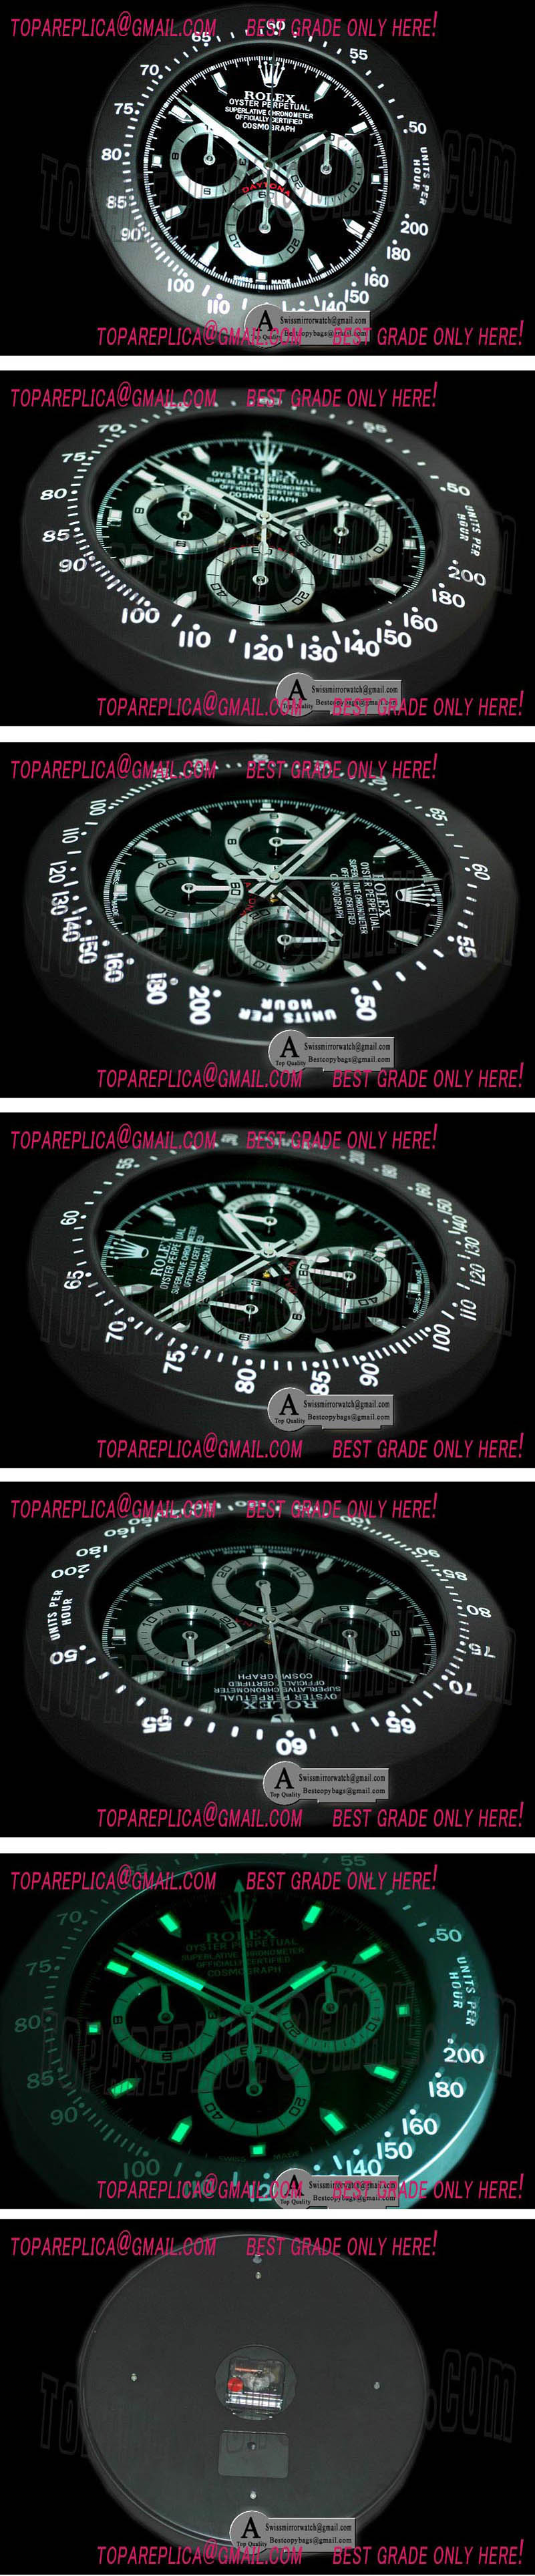 Rolex Dealer Clock Prohunter Mk1 Daytona Style Swiss Quartz Replica Watches